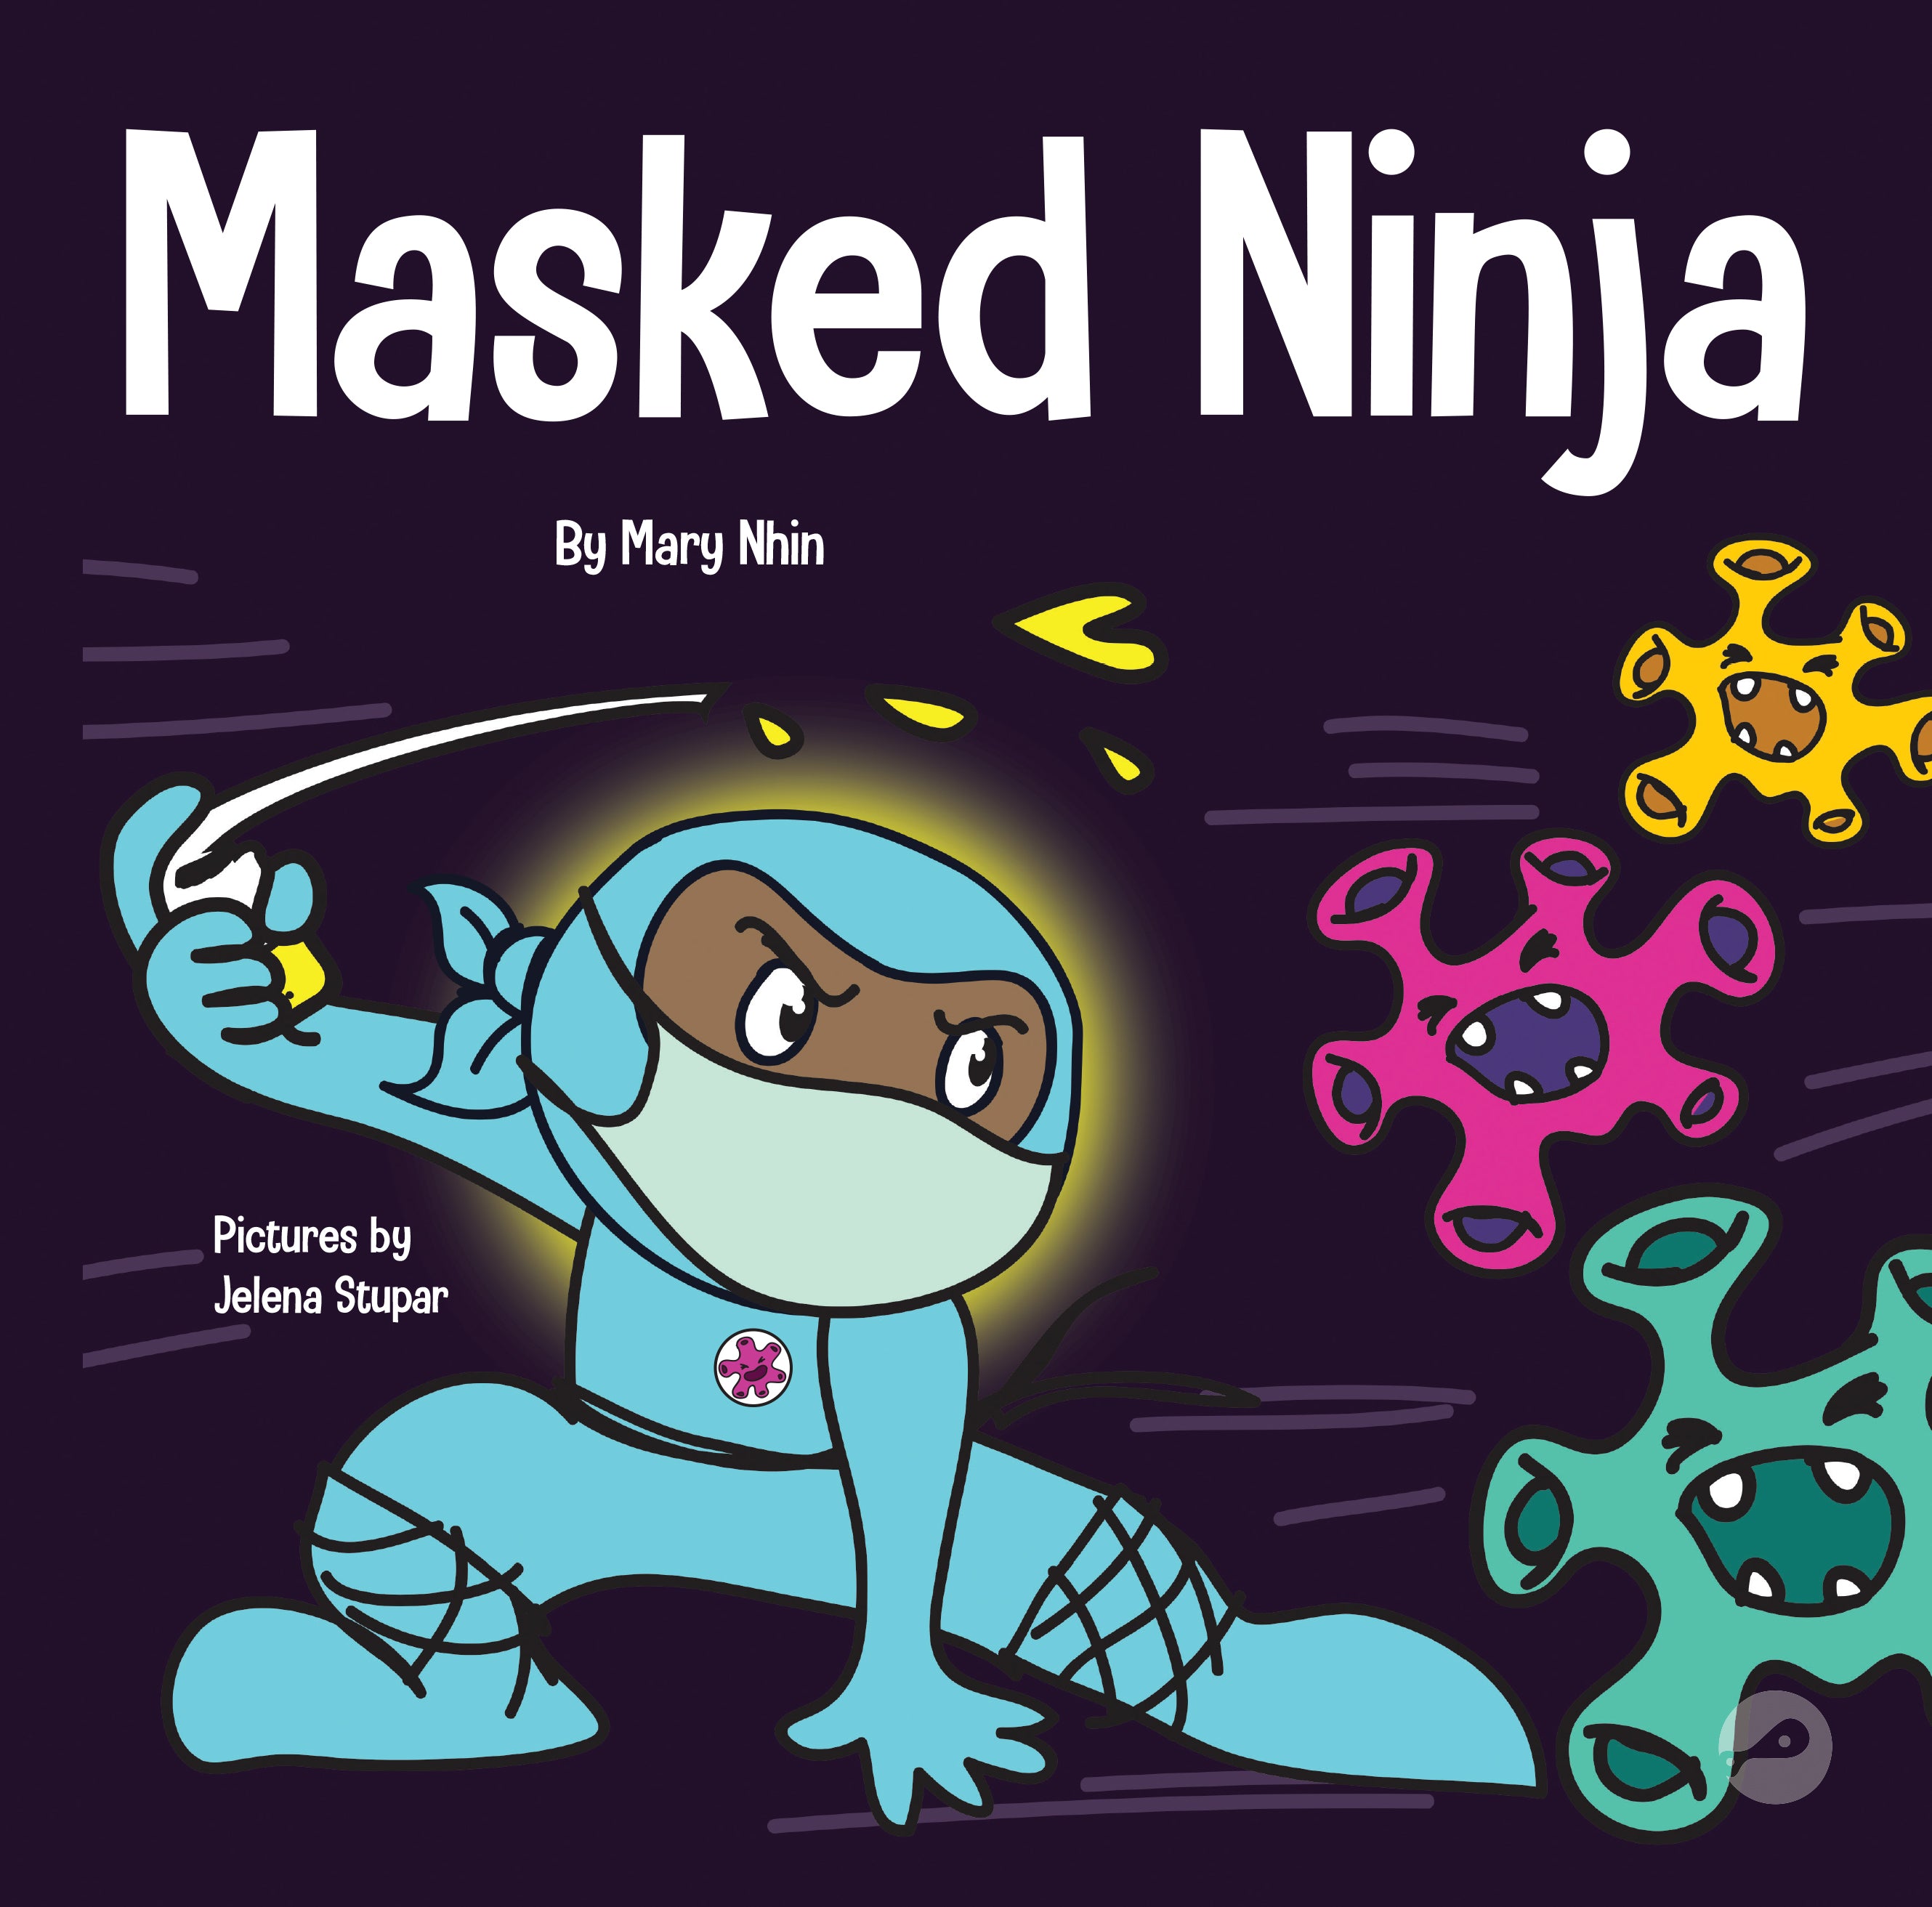 Ninja Life Hacks Self-Management 8 Book Box Set (Books 33-40) – Ninja Life  Hacks - Growth Mindset